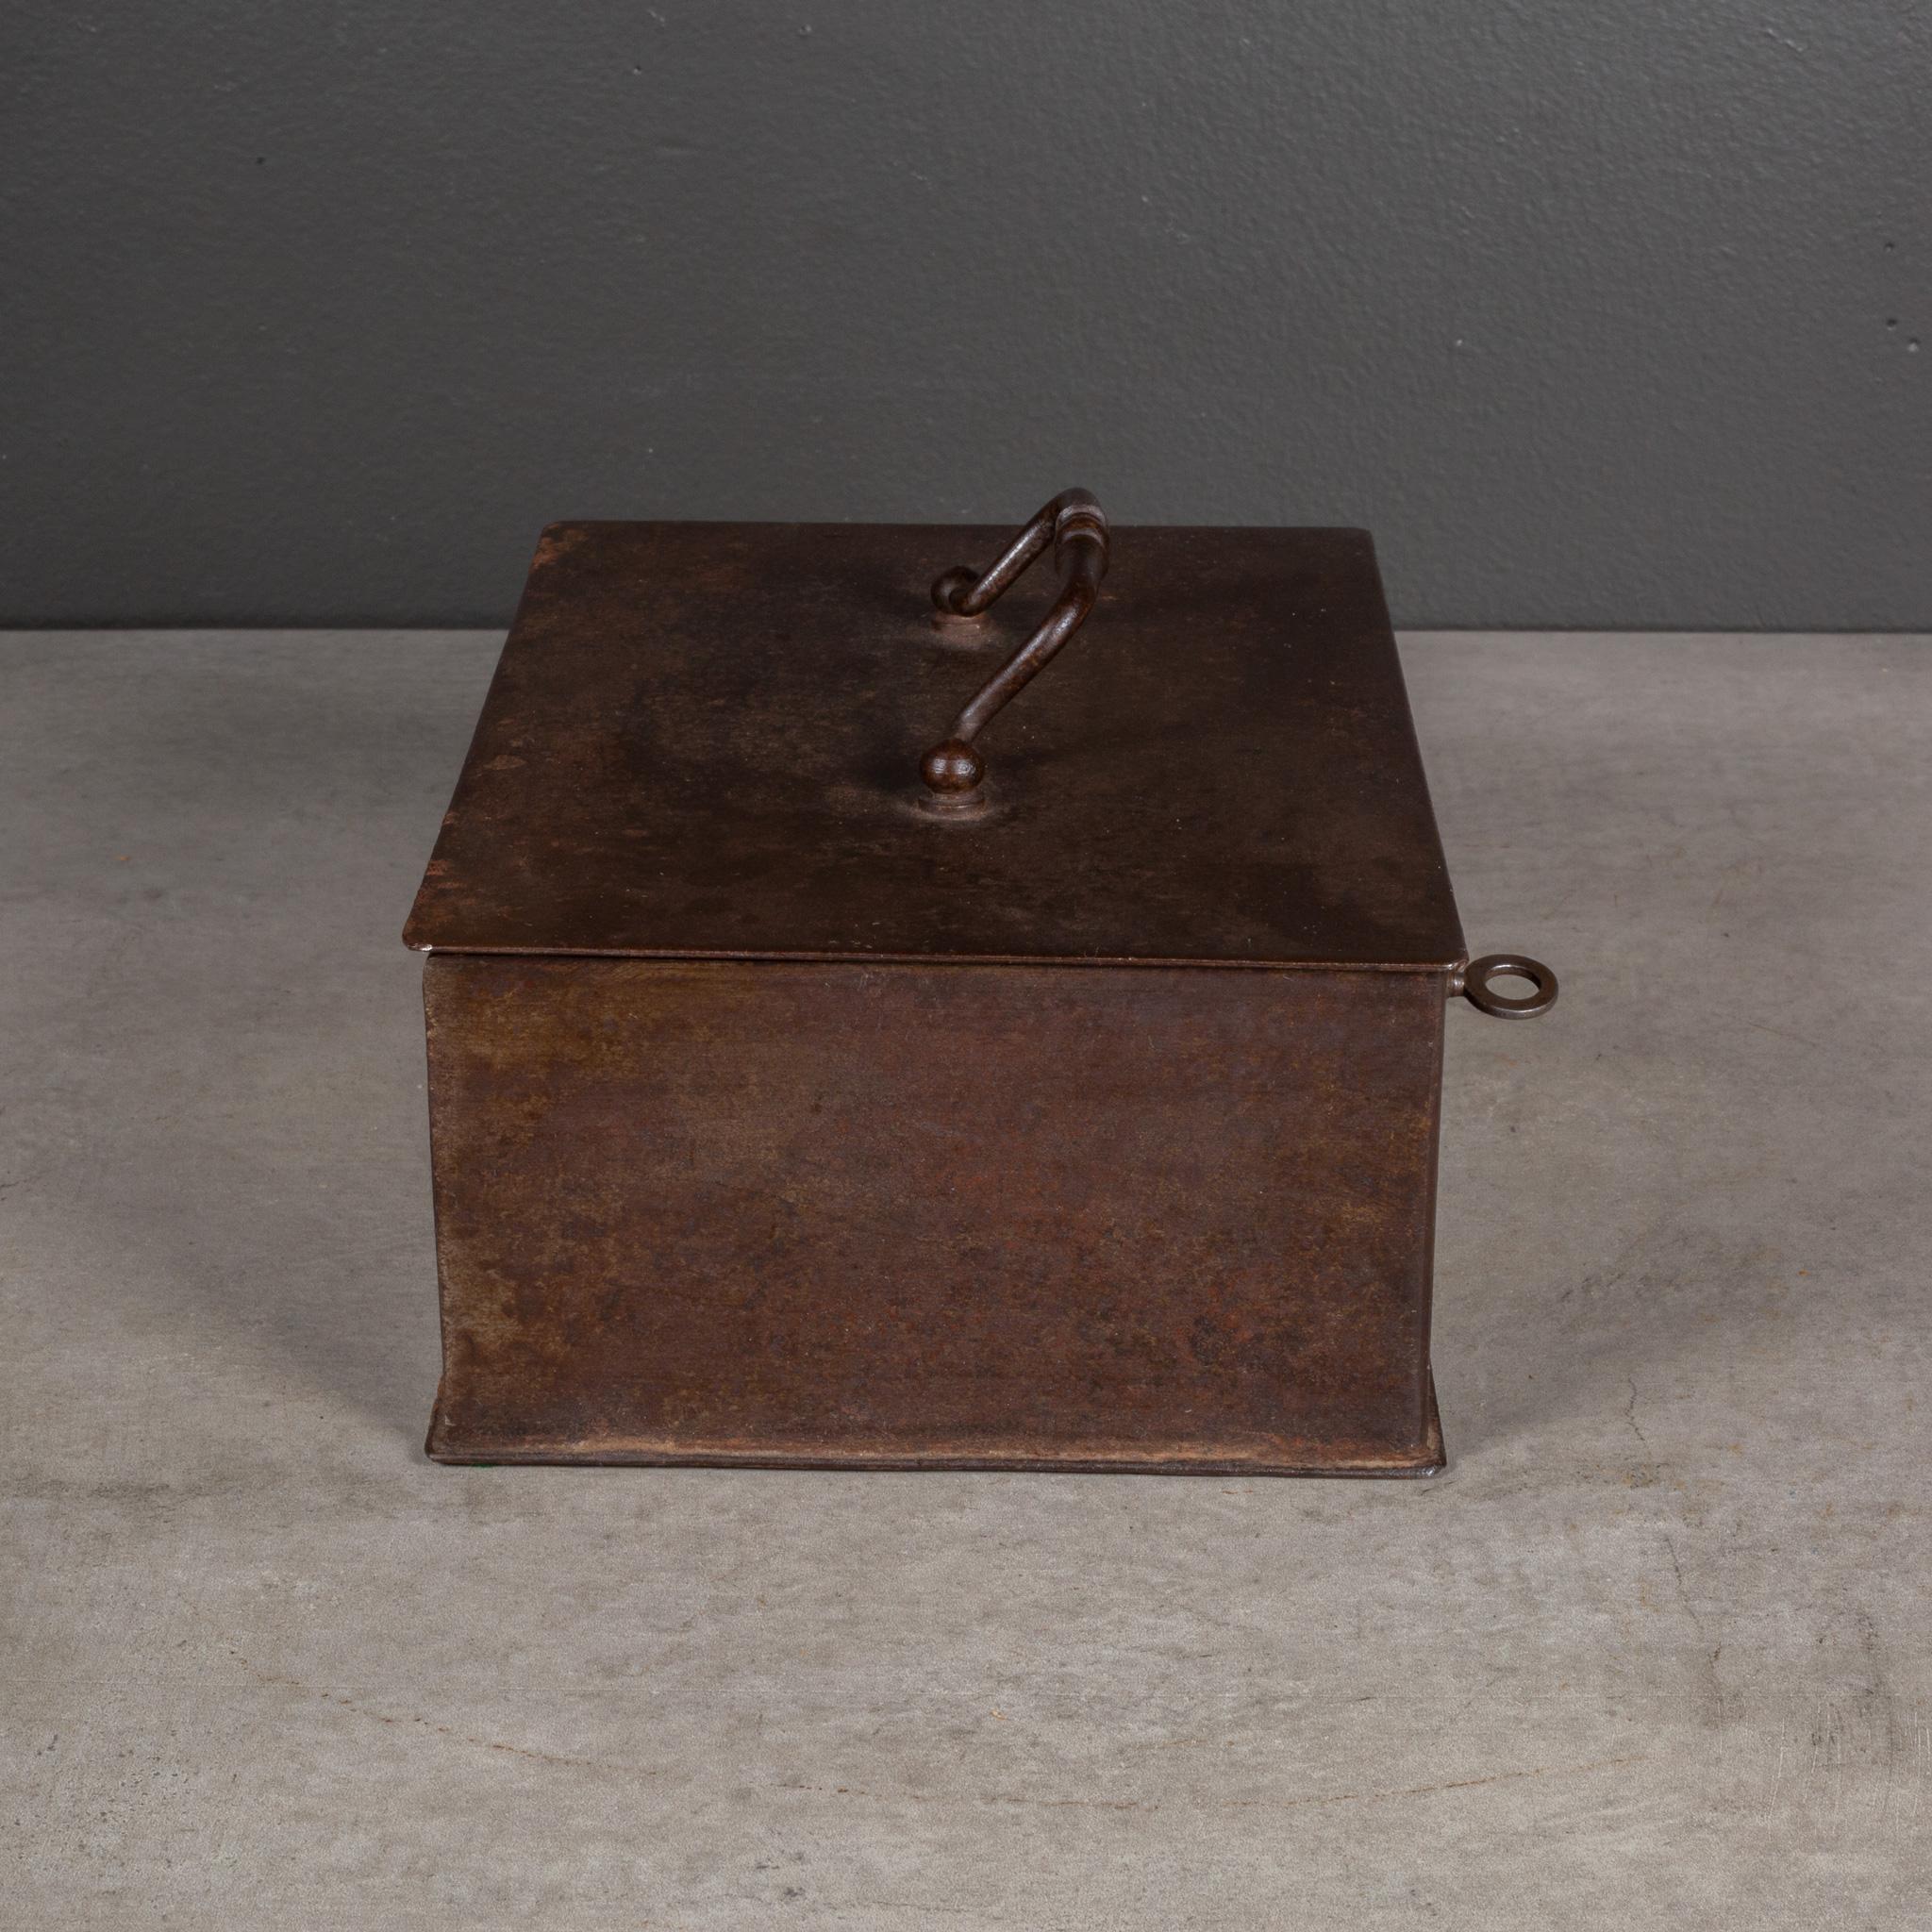 19th Century 19th c. Steel Lockbox with Key For Sale